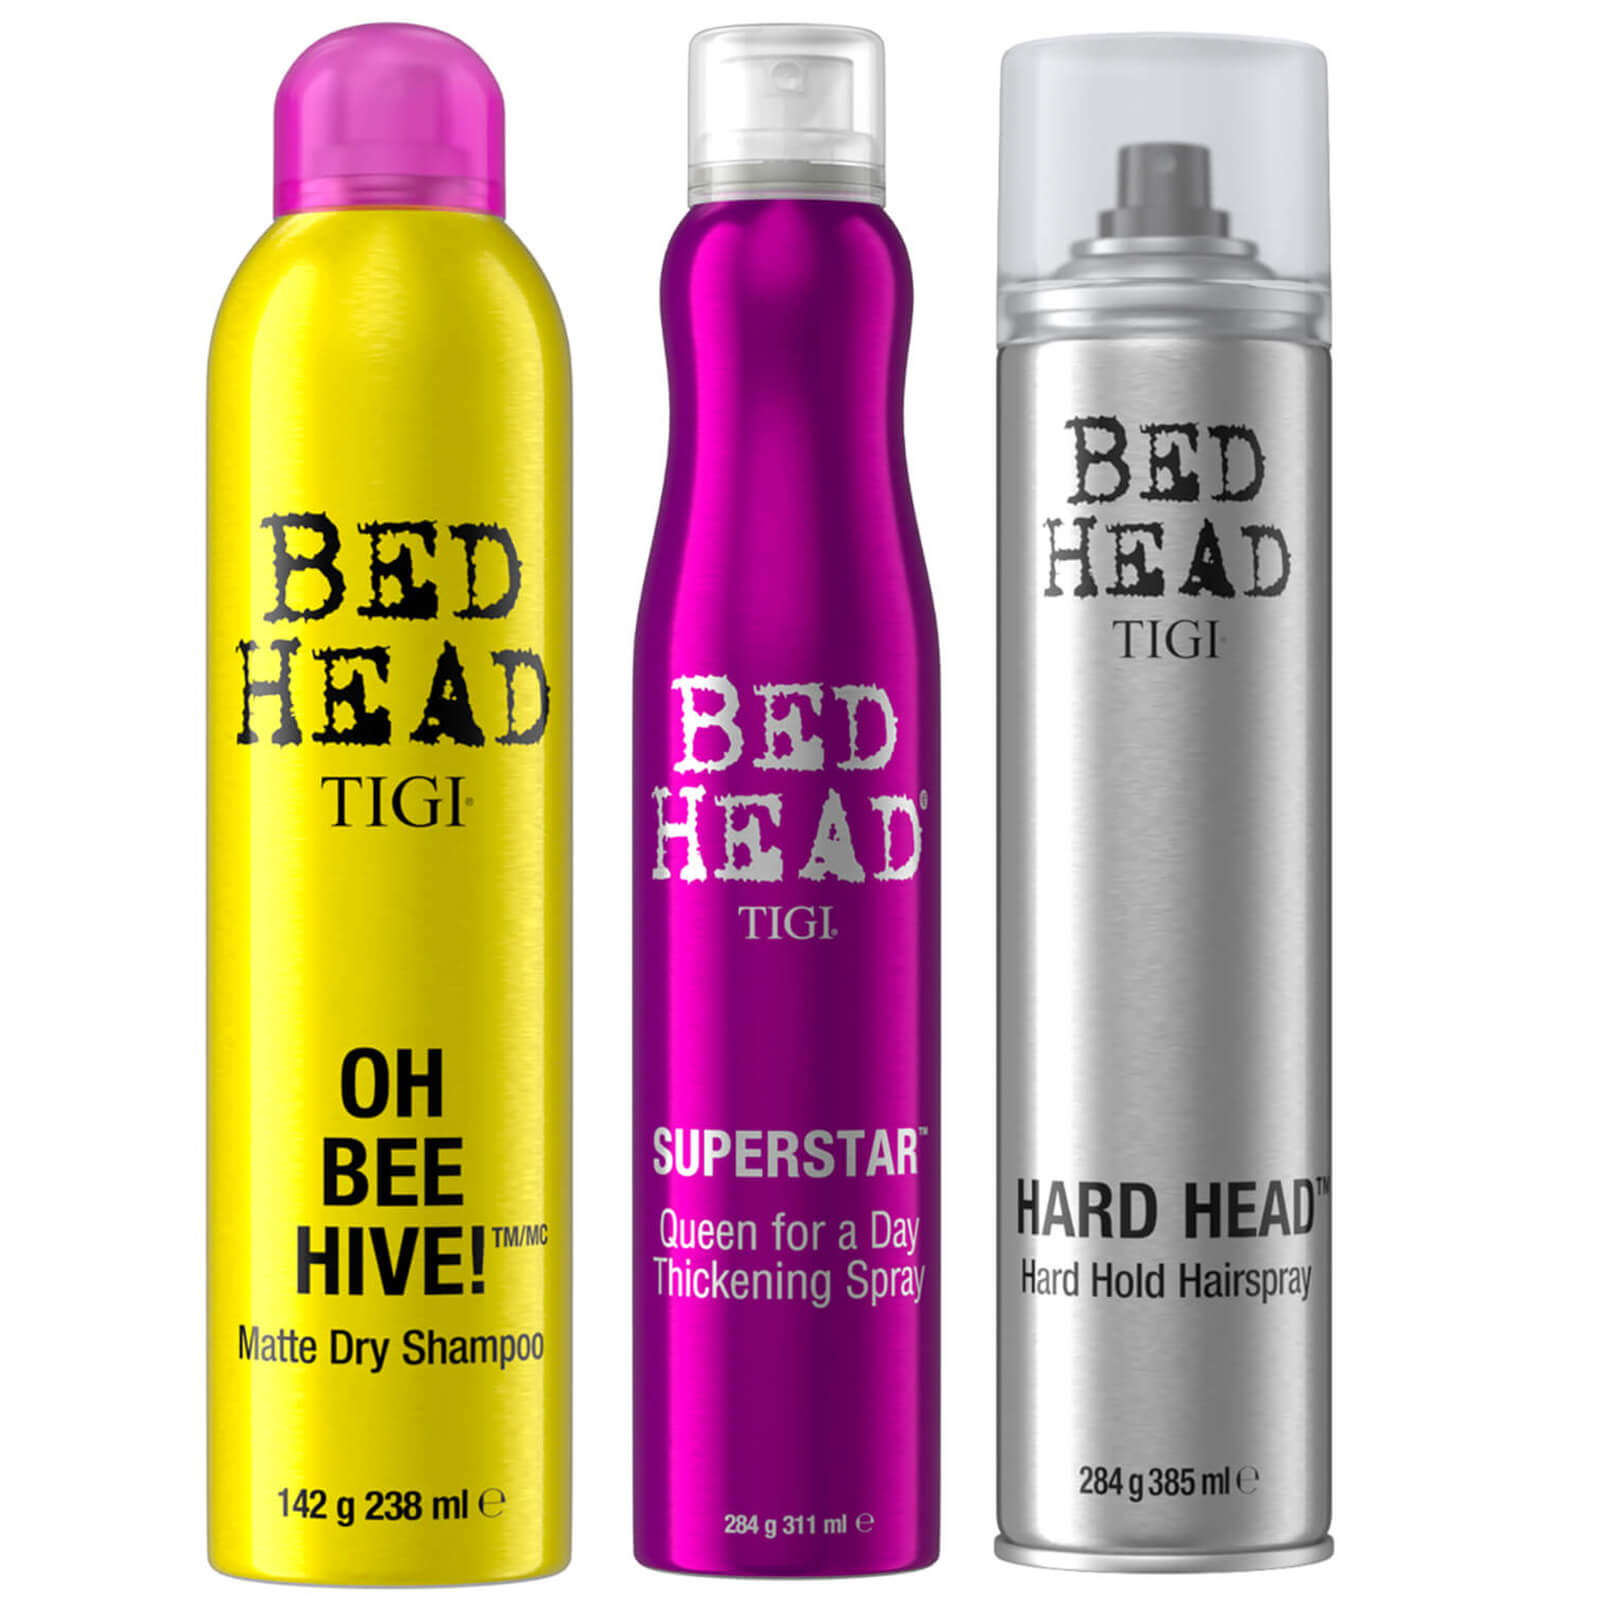 TIGI Bed Head Festival Hair Styling Set